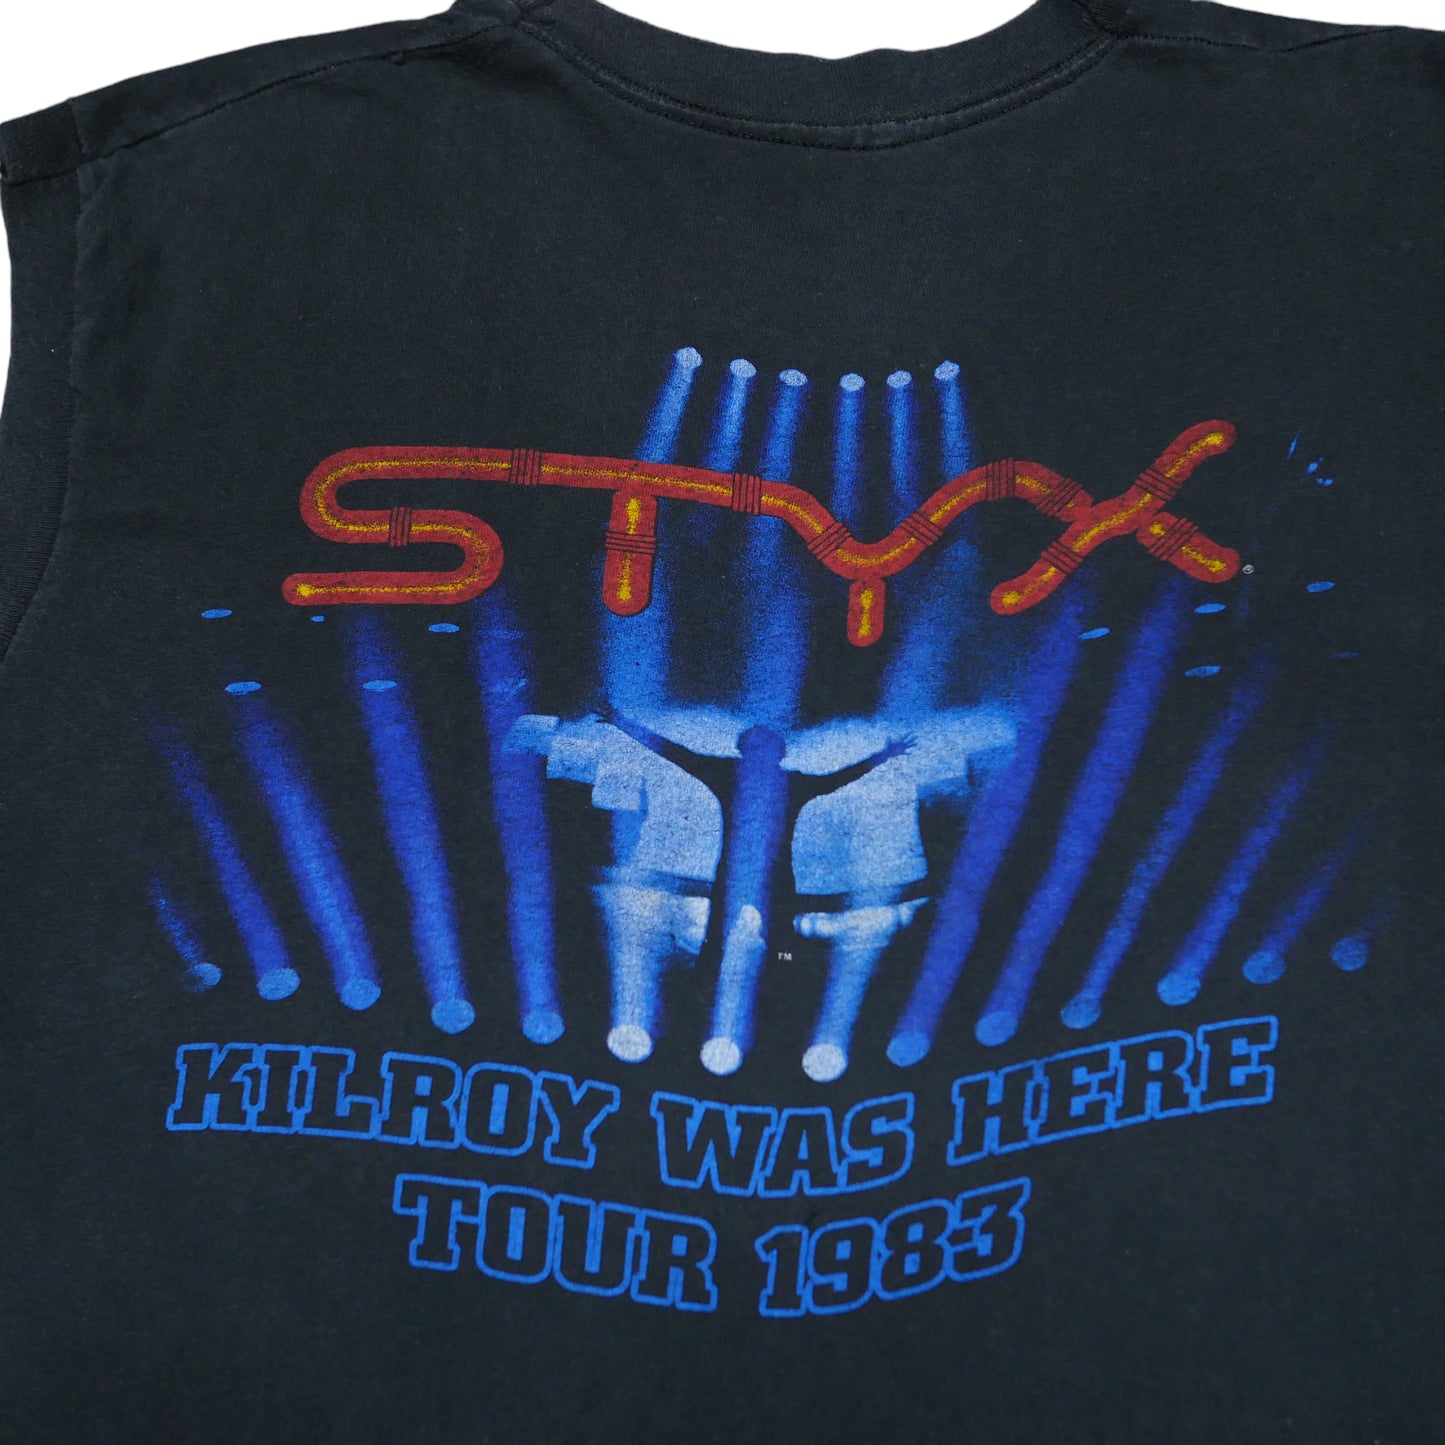 Styx Kilroy Was Here Tour 1983 Shirt - Small